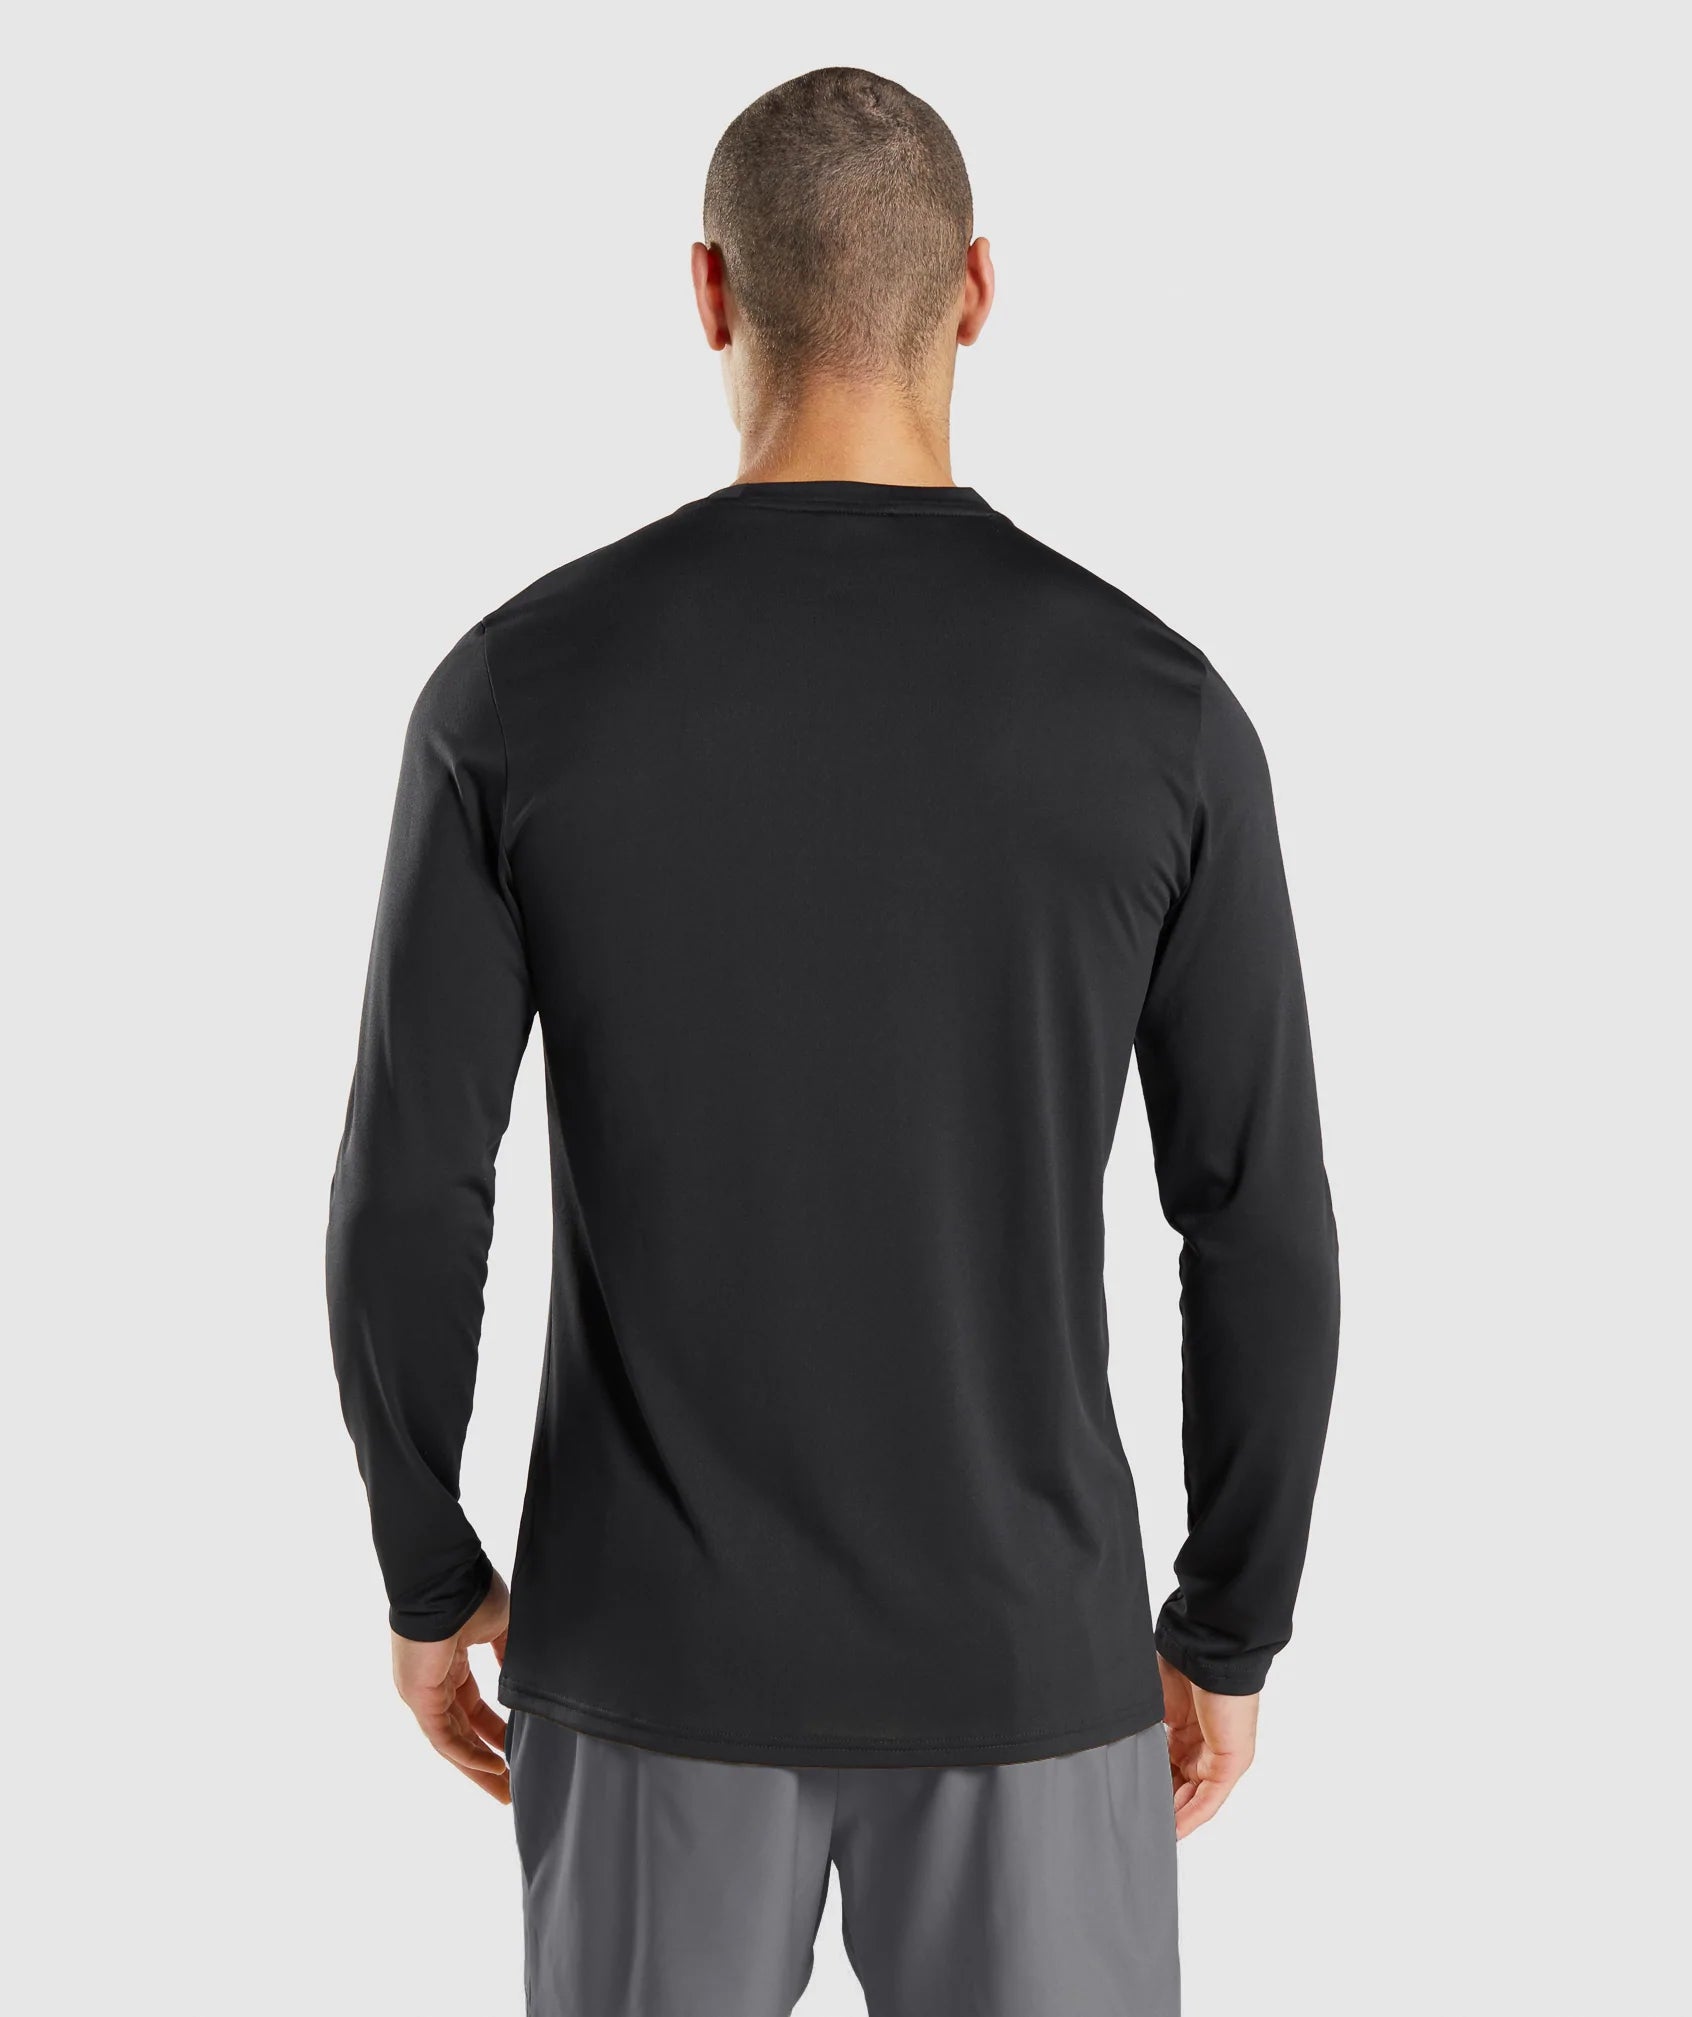 Gymshark Apollo Camo Long Sleeve T-Shirt - Black